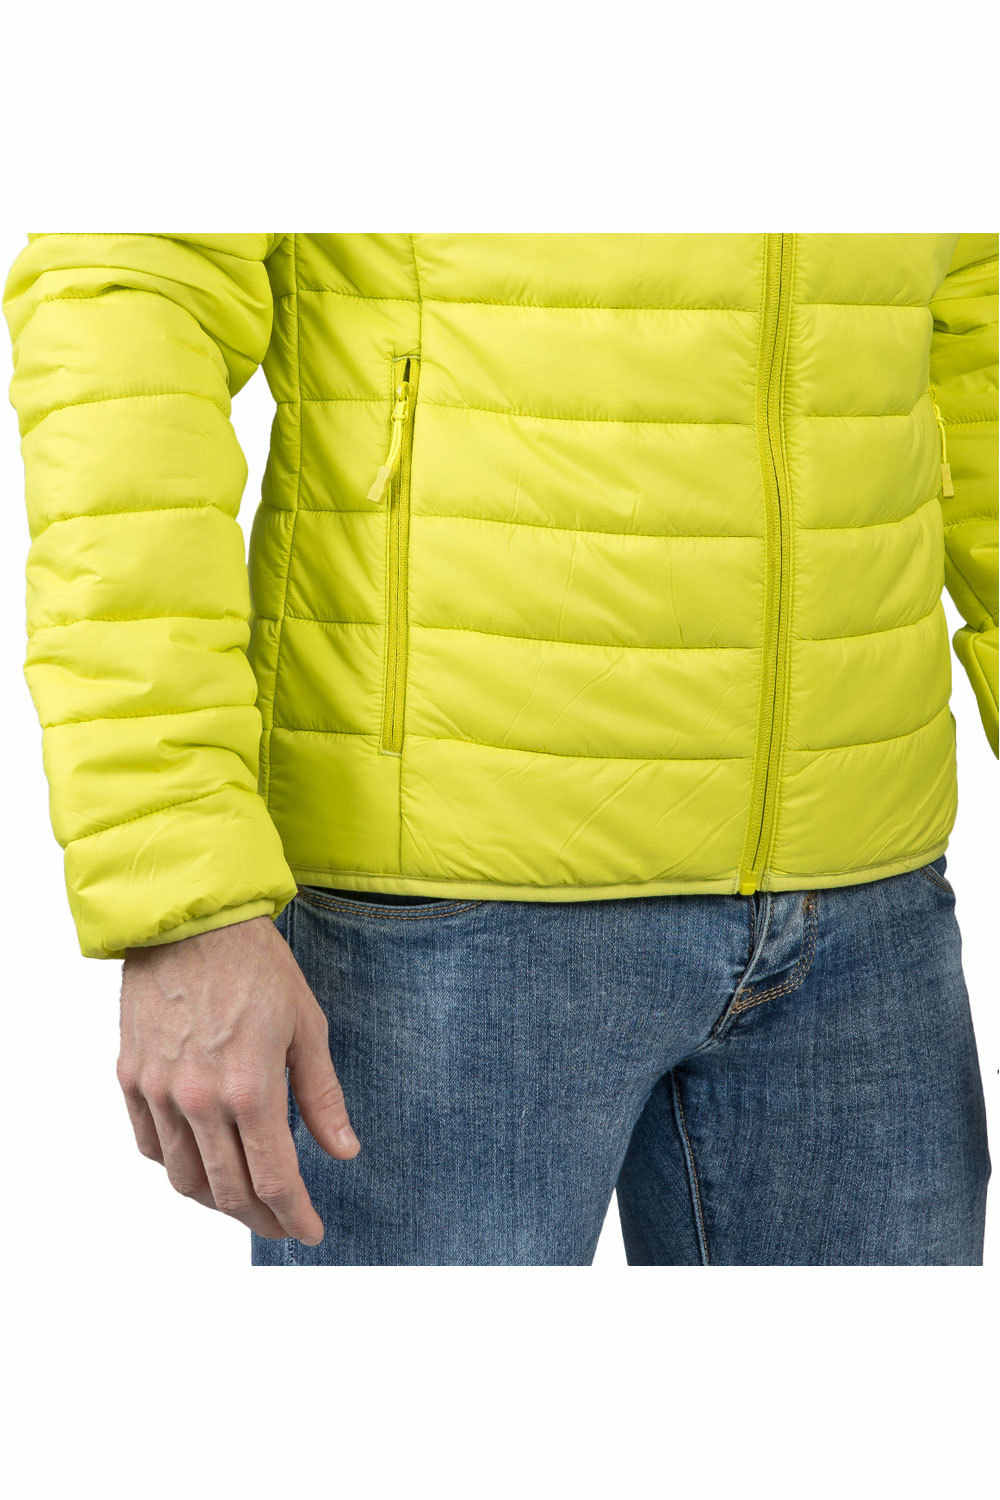 Izas chaqueta outdoor hombre GABES M 03